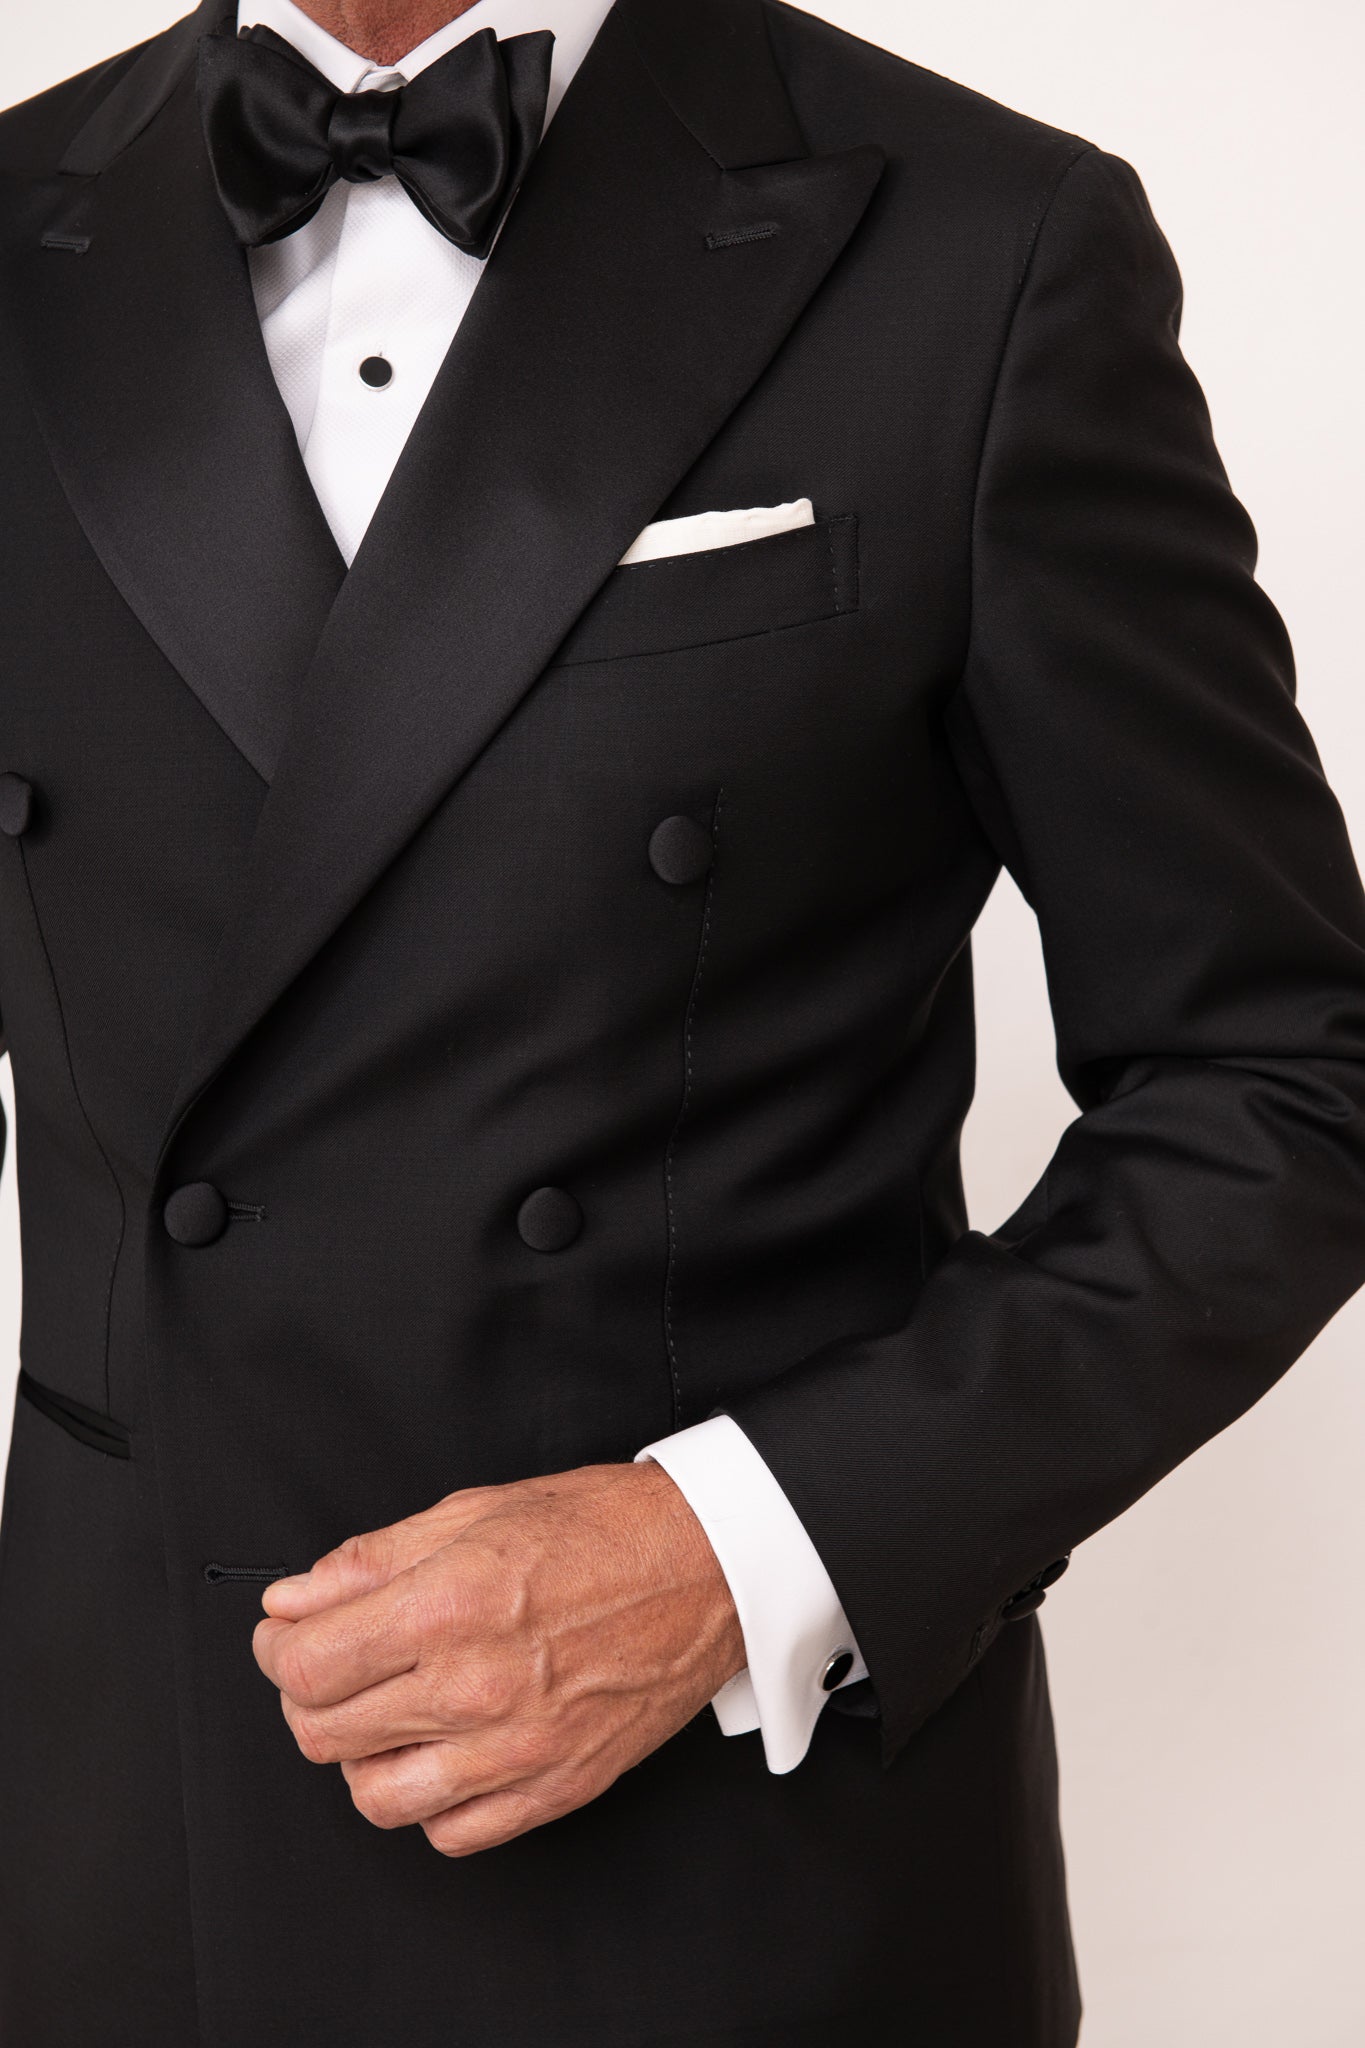 Black Tuxedo, Italian made Tuxedo, Italian tuxedo, Smoking nero, smoking made in Italy, smoking italiano, Tuxedo noir, Tuxedo fabriqué en Italie, Tuxedo italien, 